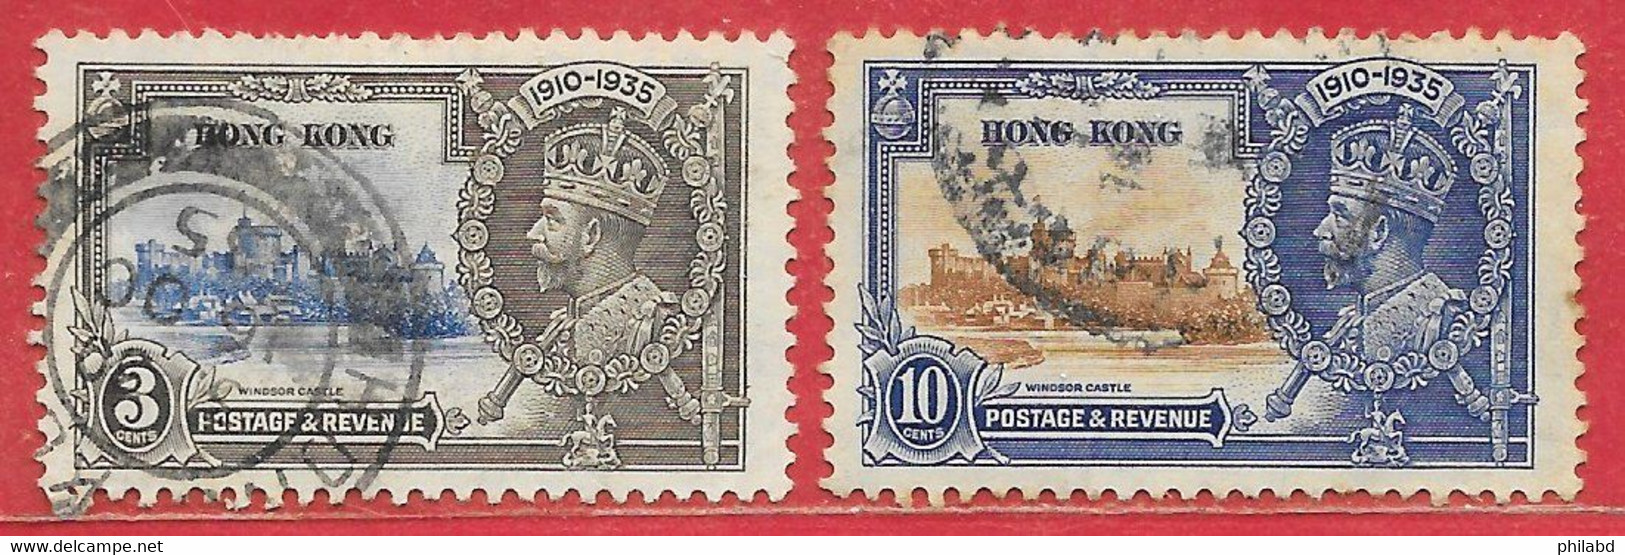 Hong Kong N°132 3c Gris & Outremer, N°134 10c Bleu-violet & Brun-rouge (filigrane Ca Multiple, Dentelé 11x12) 1935 O - Gebruikt